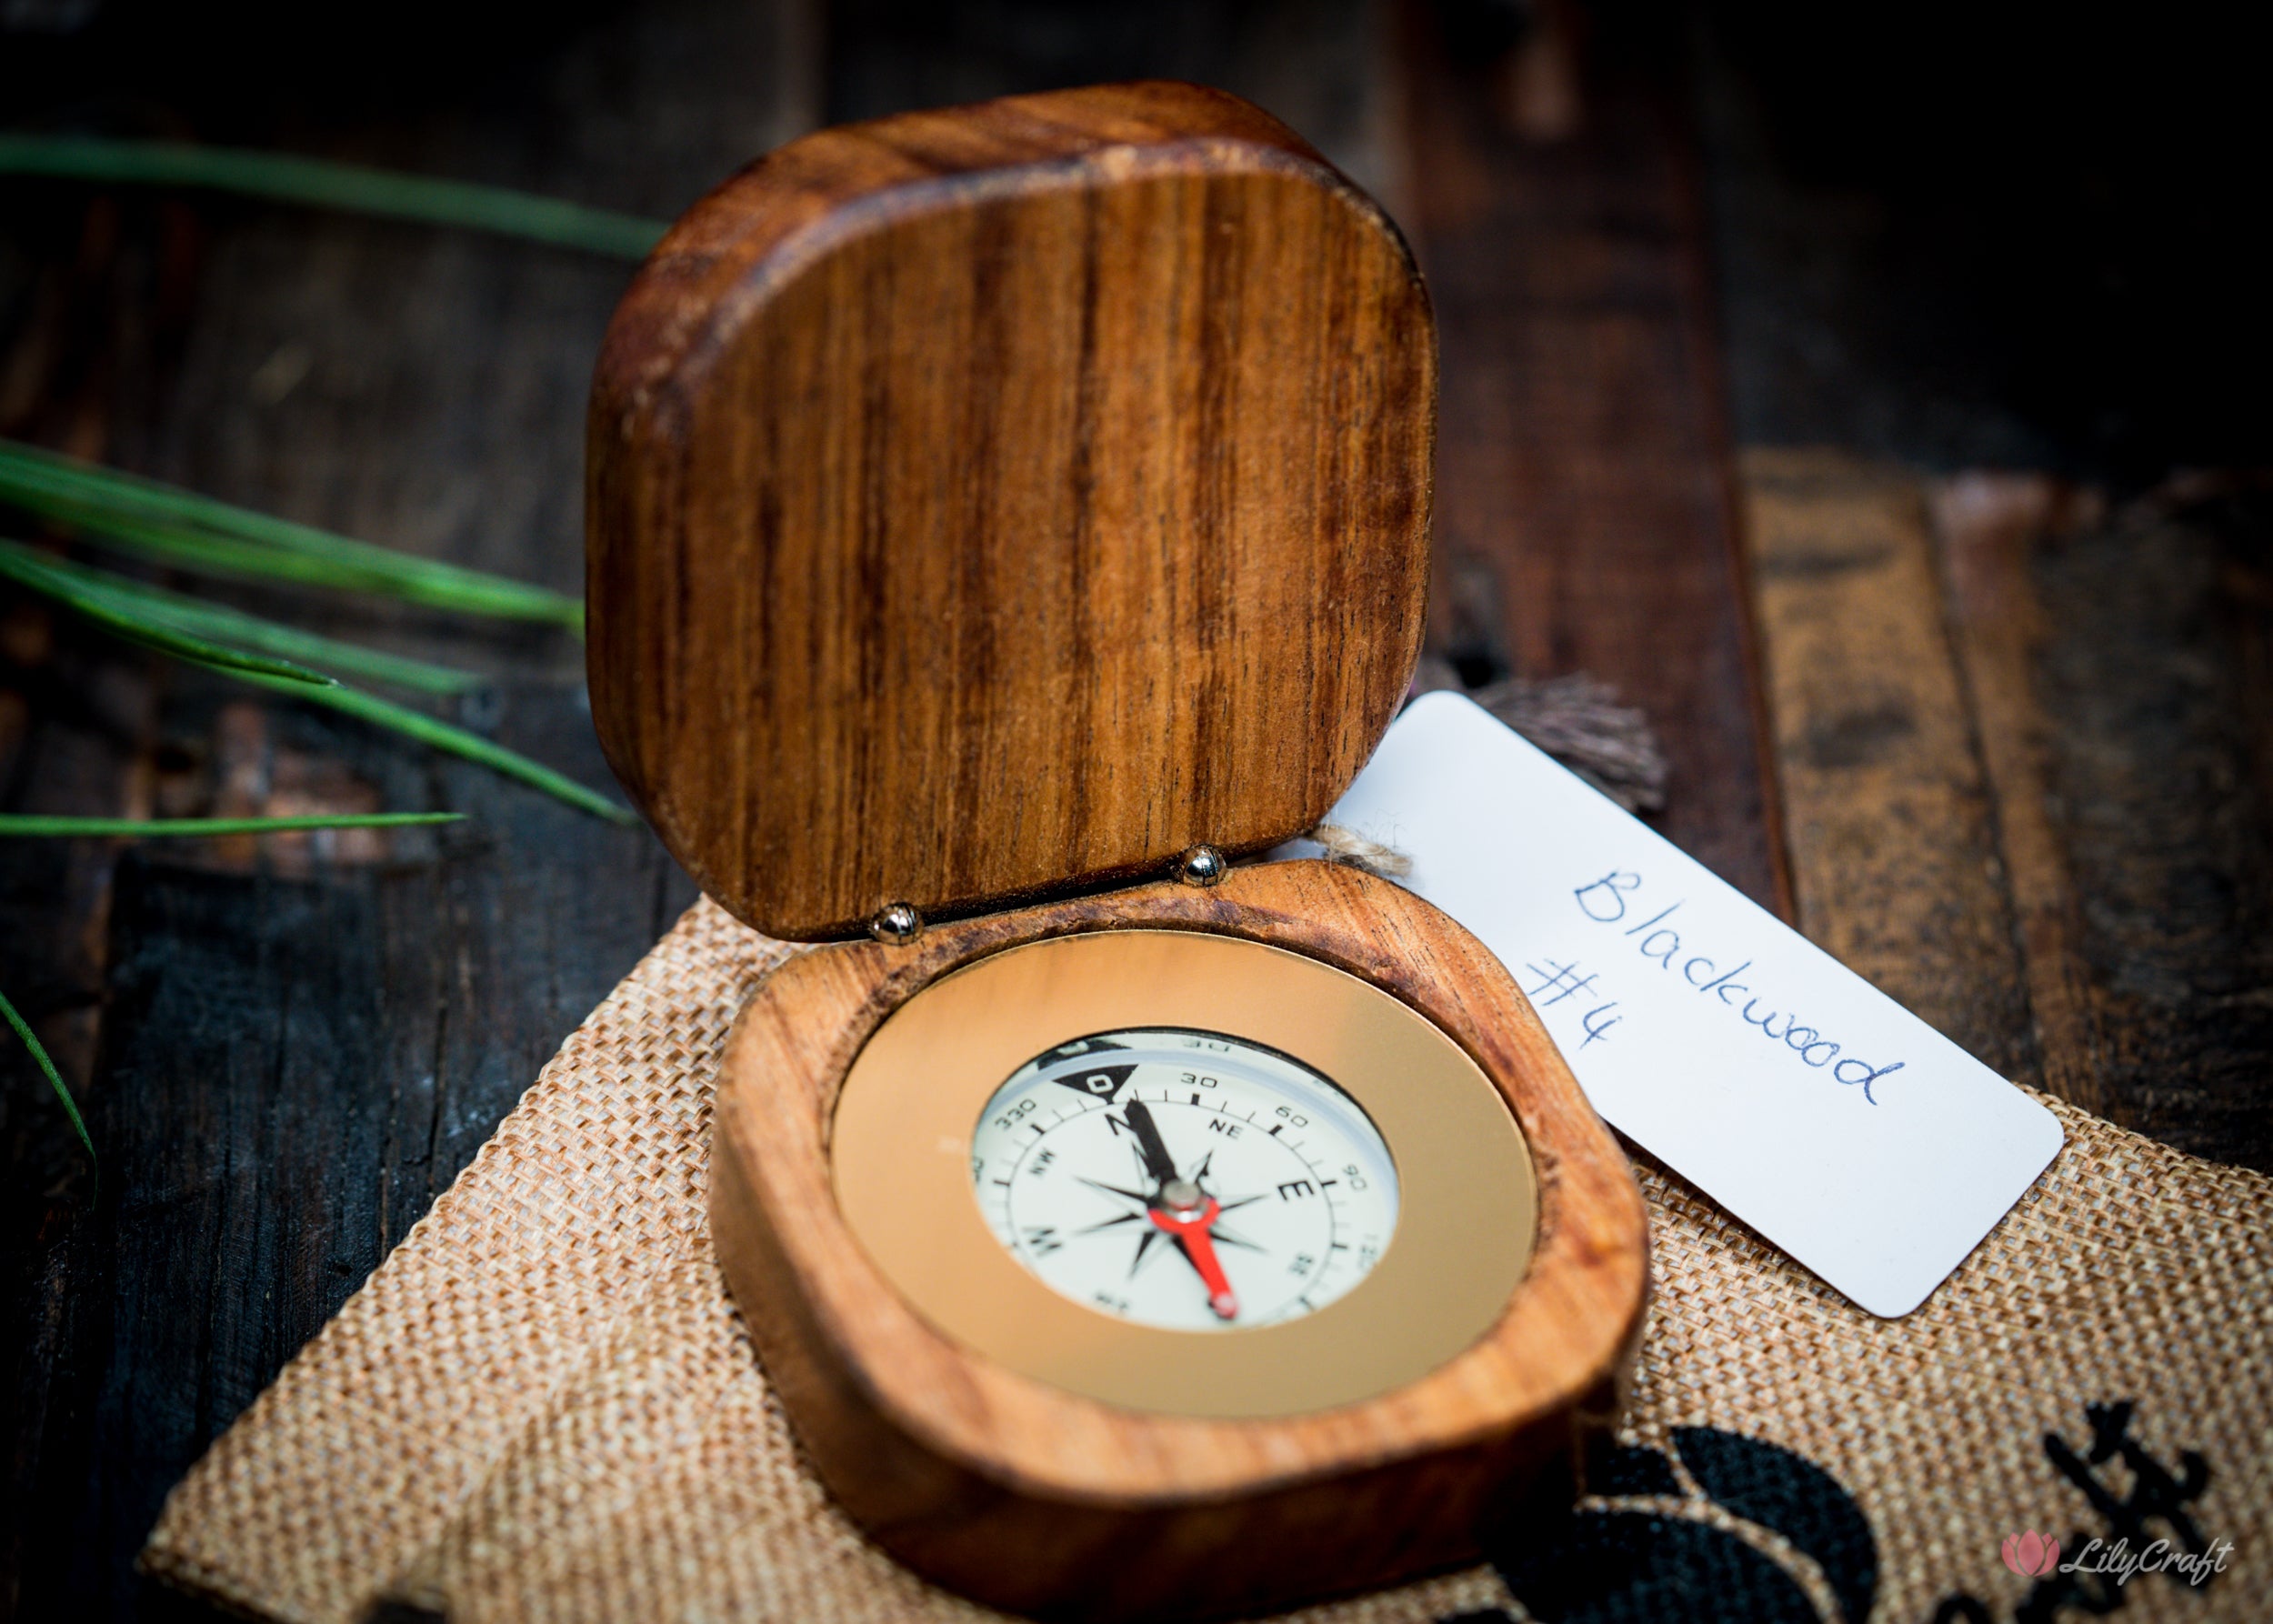 Handmade compass showcasing natural wood grain.